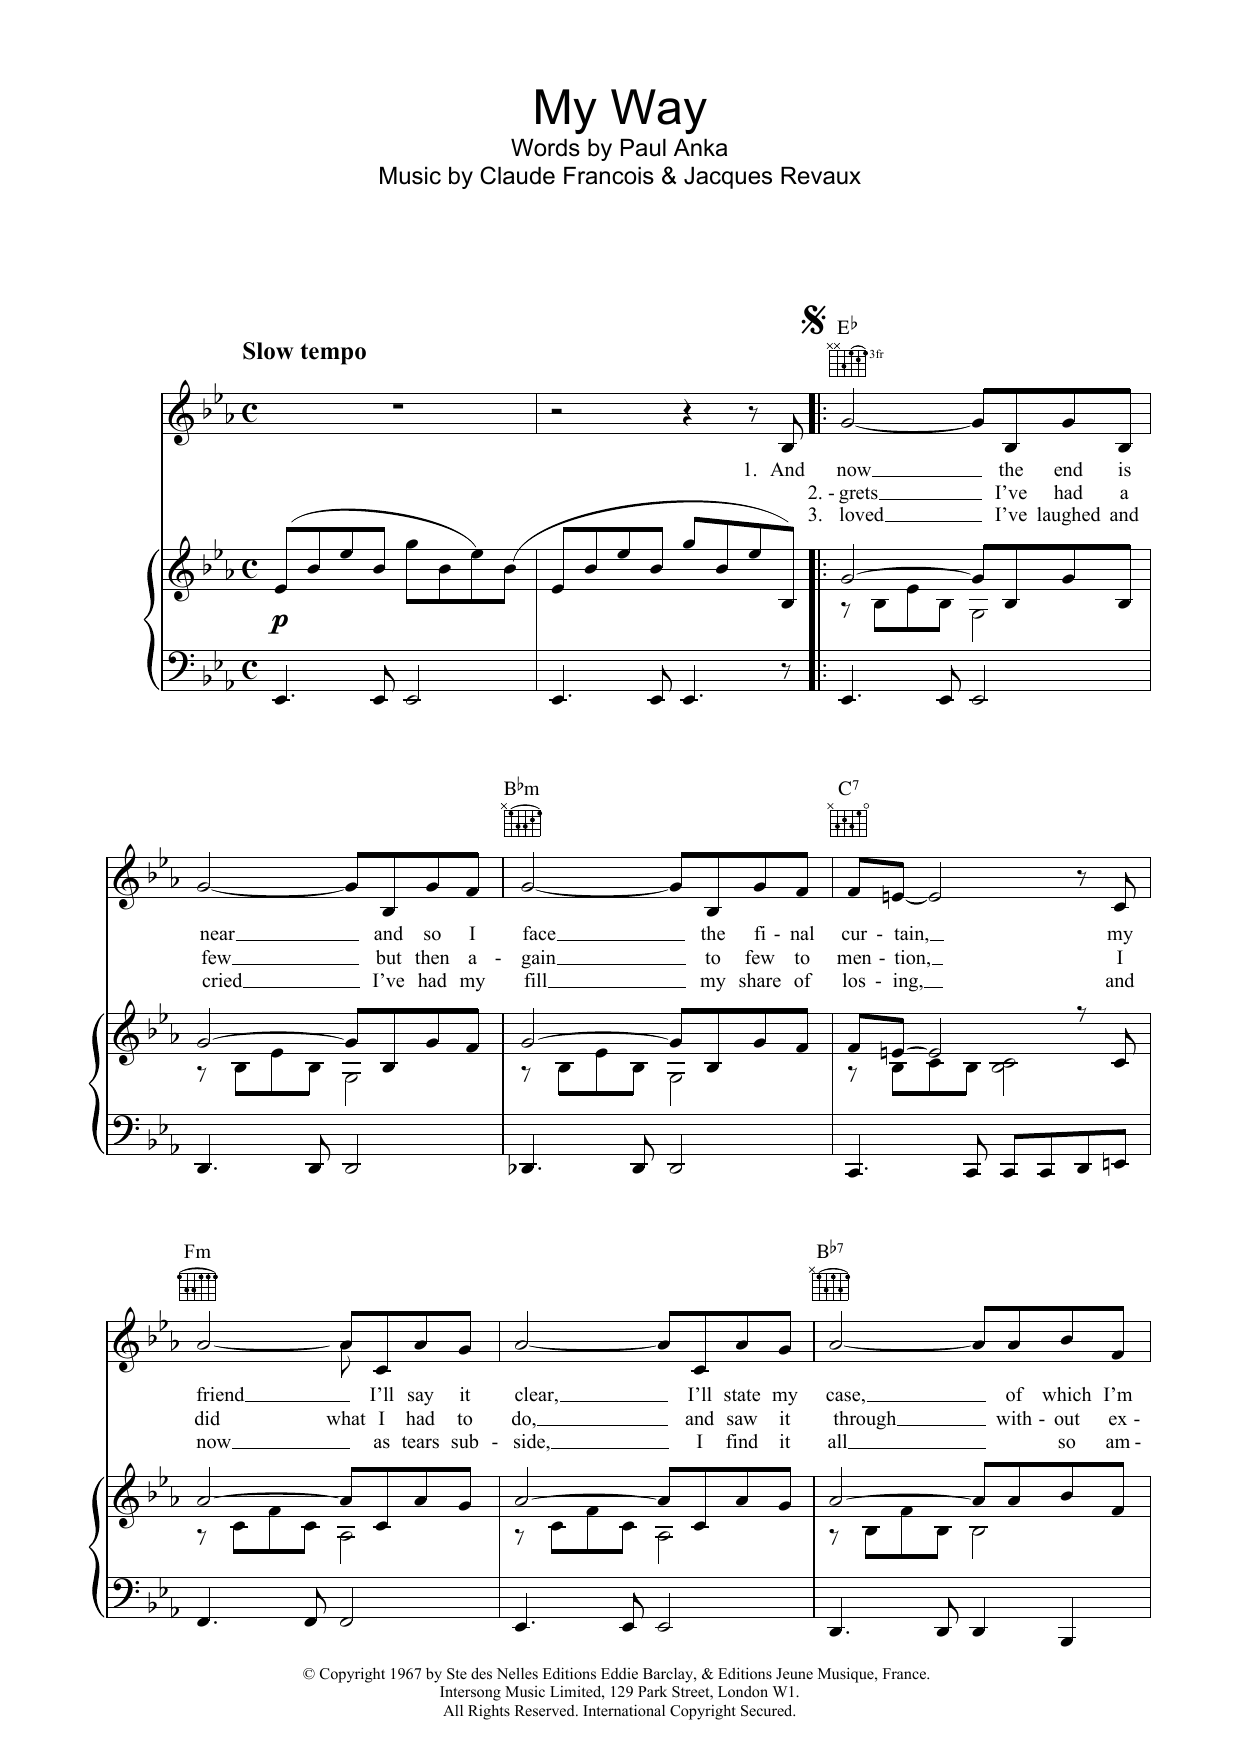 Frank Sinatra My Way Sheet Music Notes & Chords for Violin - Download or Print PDF